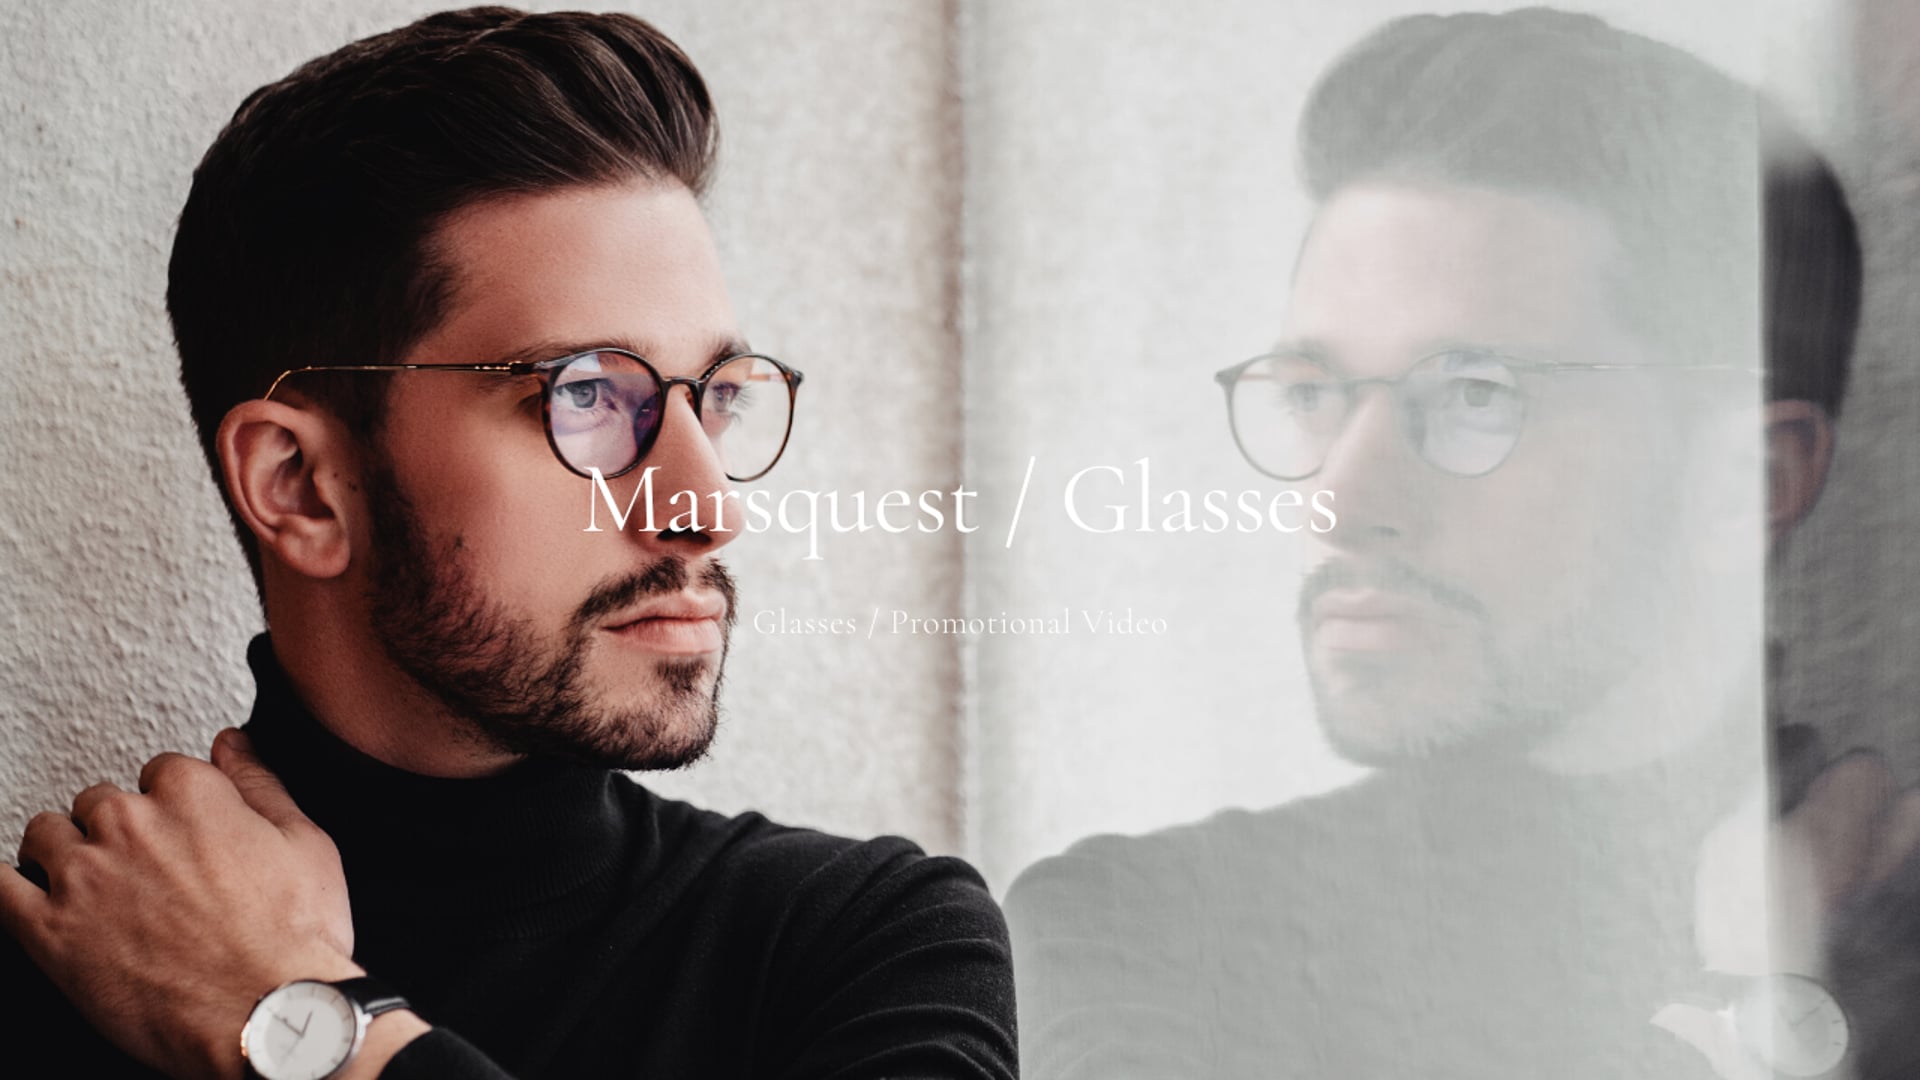 Marsquest / Glasses / Miami Promotional video